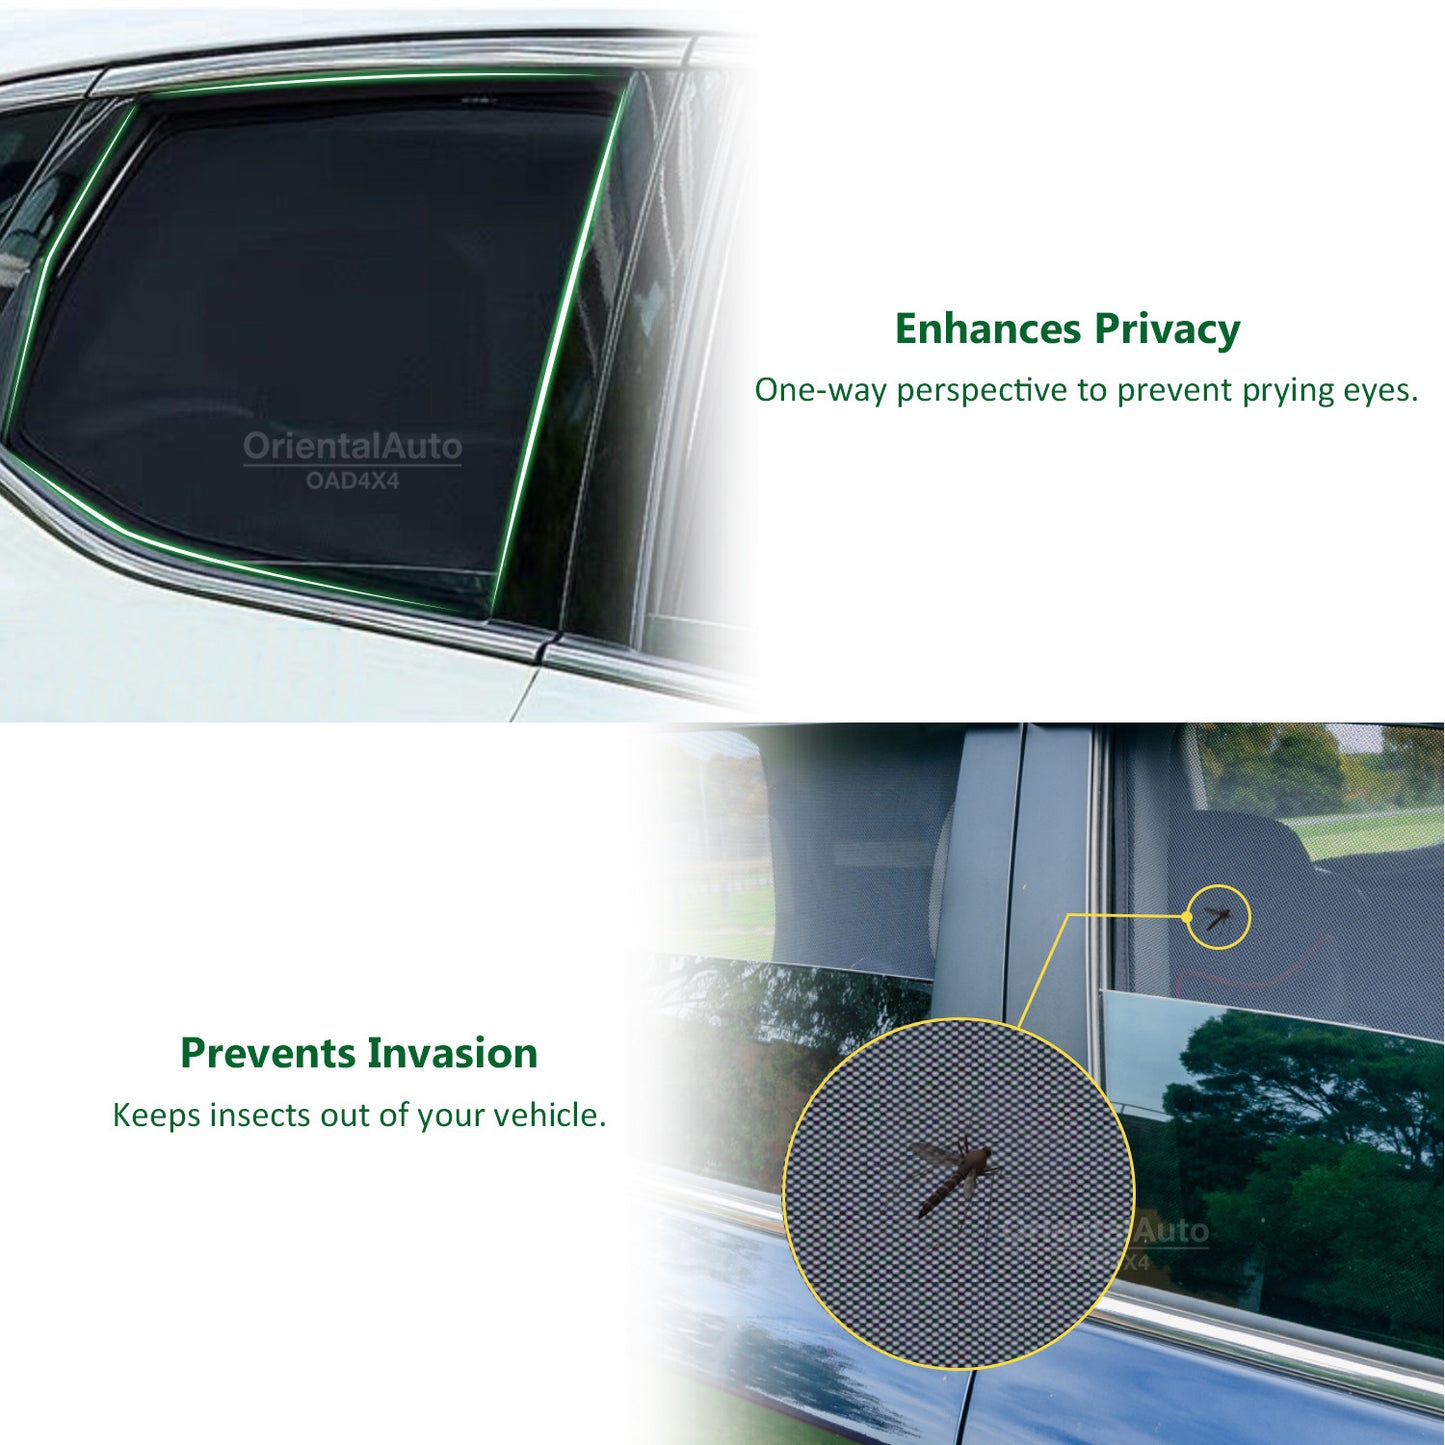 4PCS Magnetic Sun Shade for Hyundai I30 Hatch 2017-Onwards Window Sun Shades UV Protection Mesh Cover